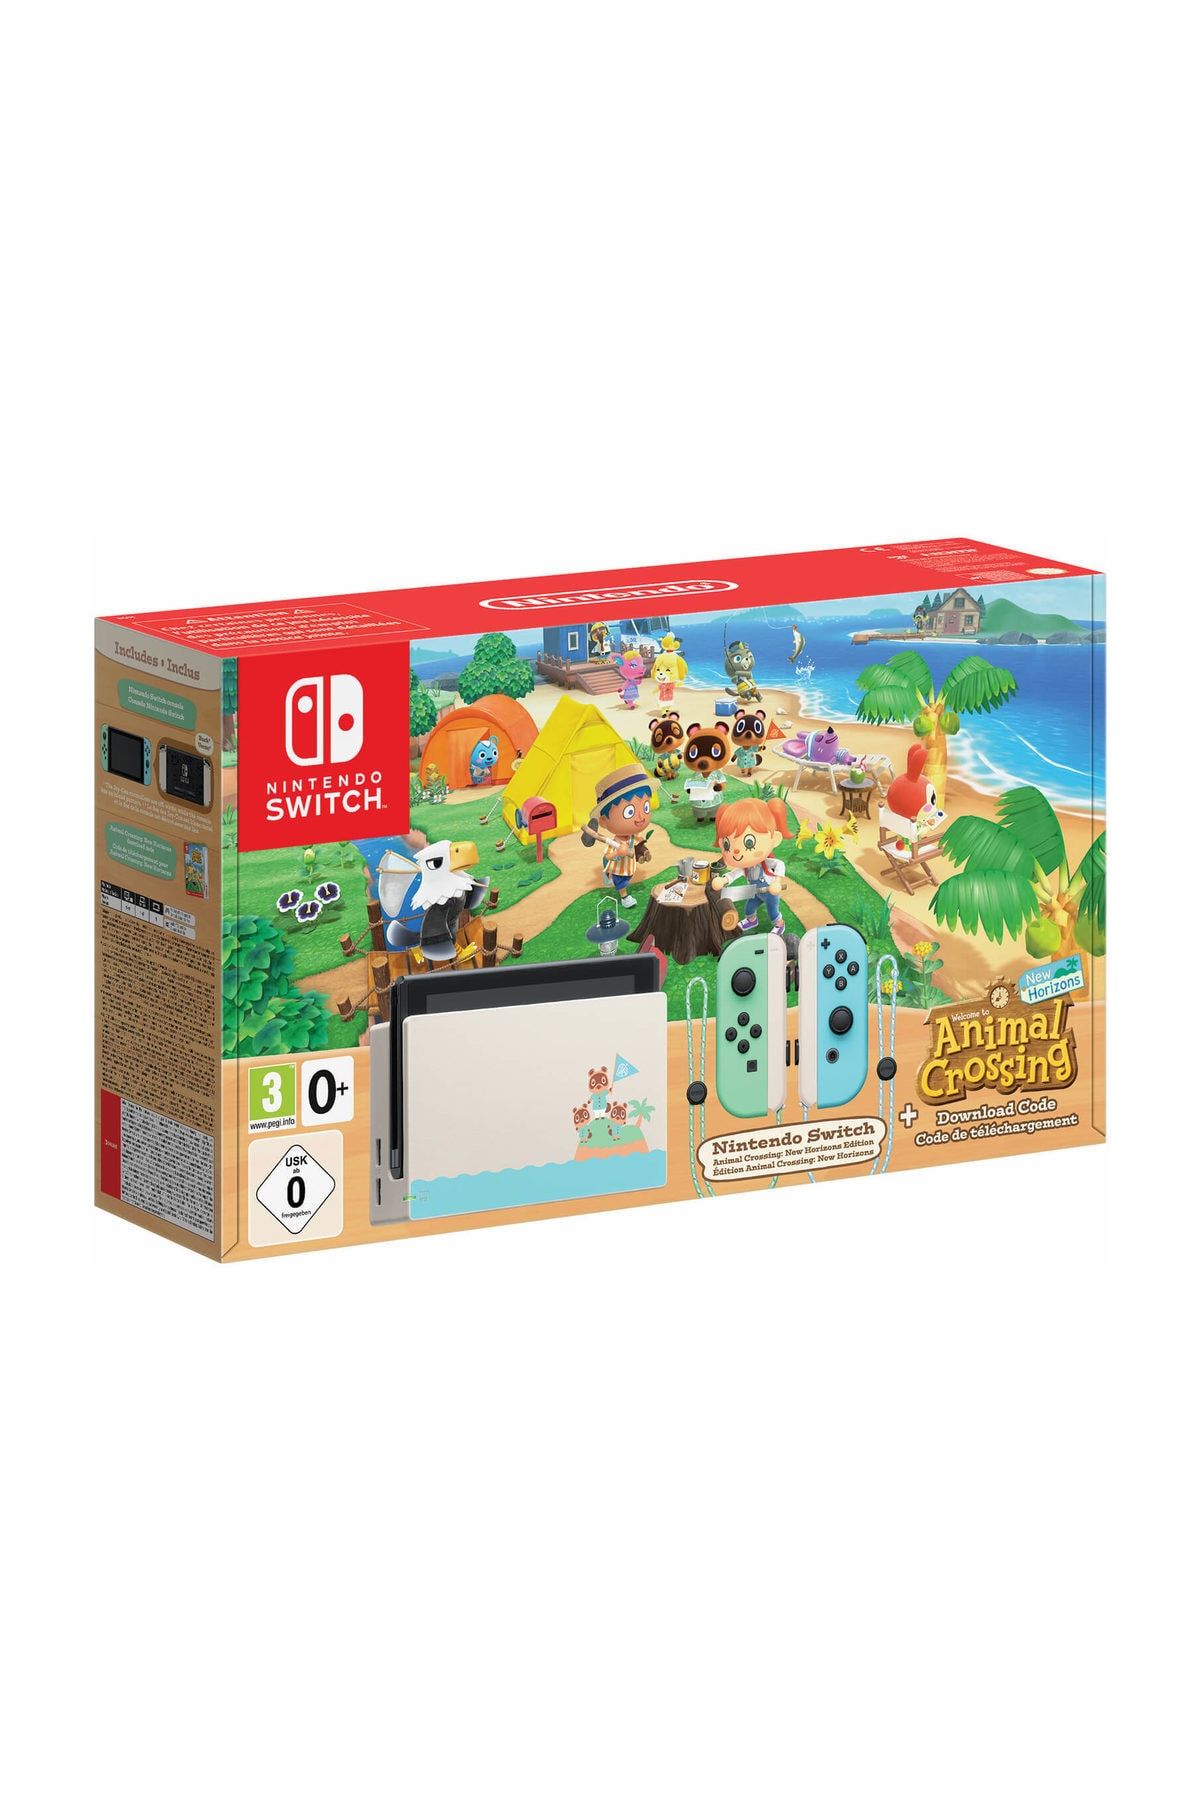 Nintendo Switch Konsol Animal Crossing Oyun Hediyeli New Horizons Edition (Distribütör Garantili)